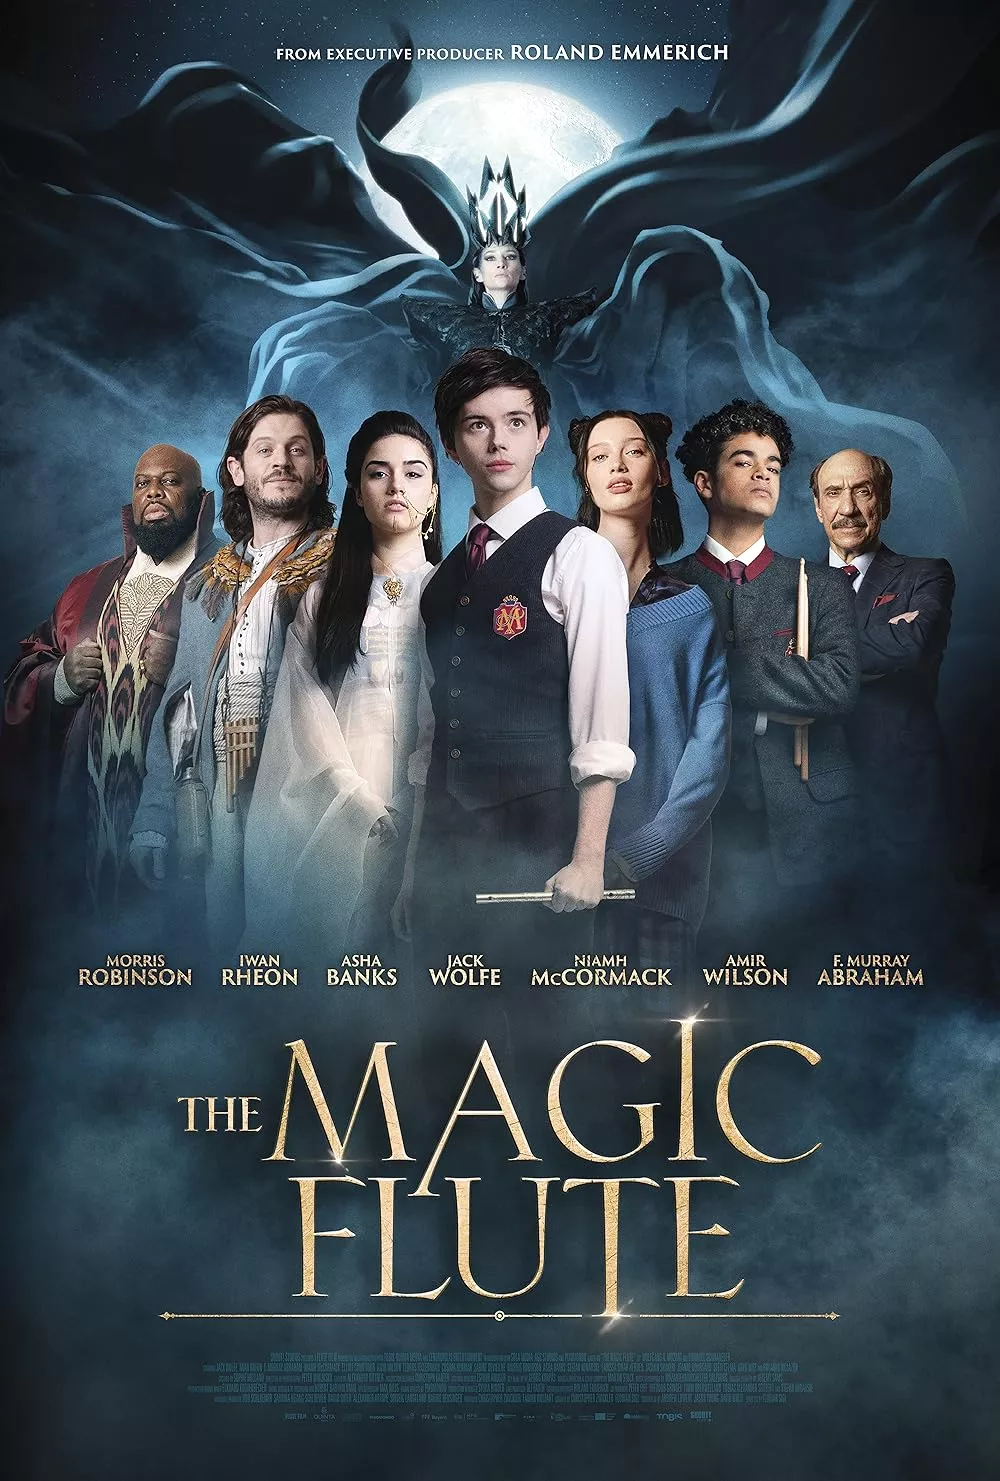 The Magic Flute SkyShowtime